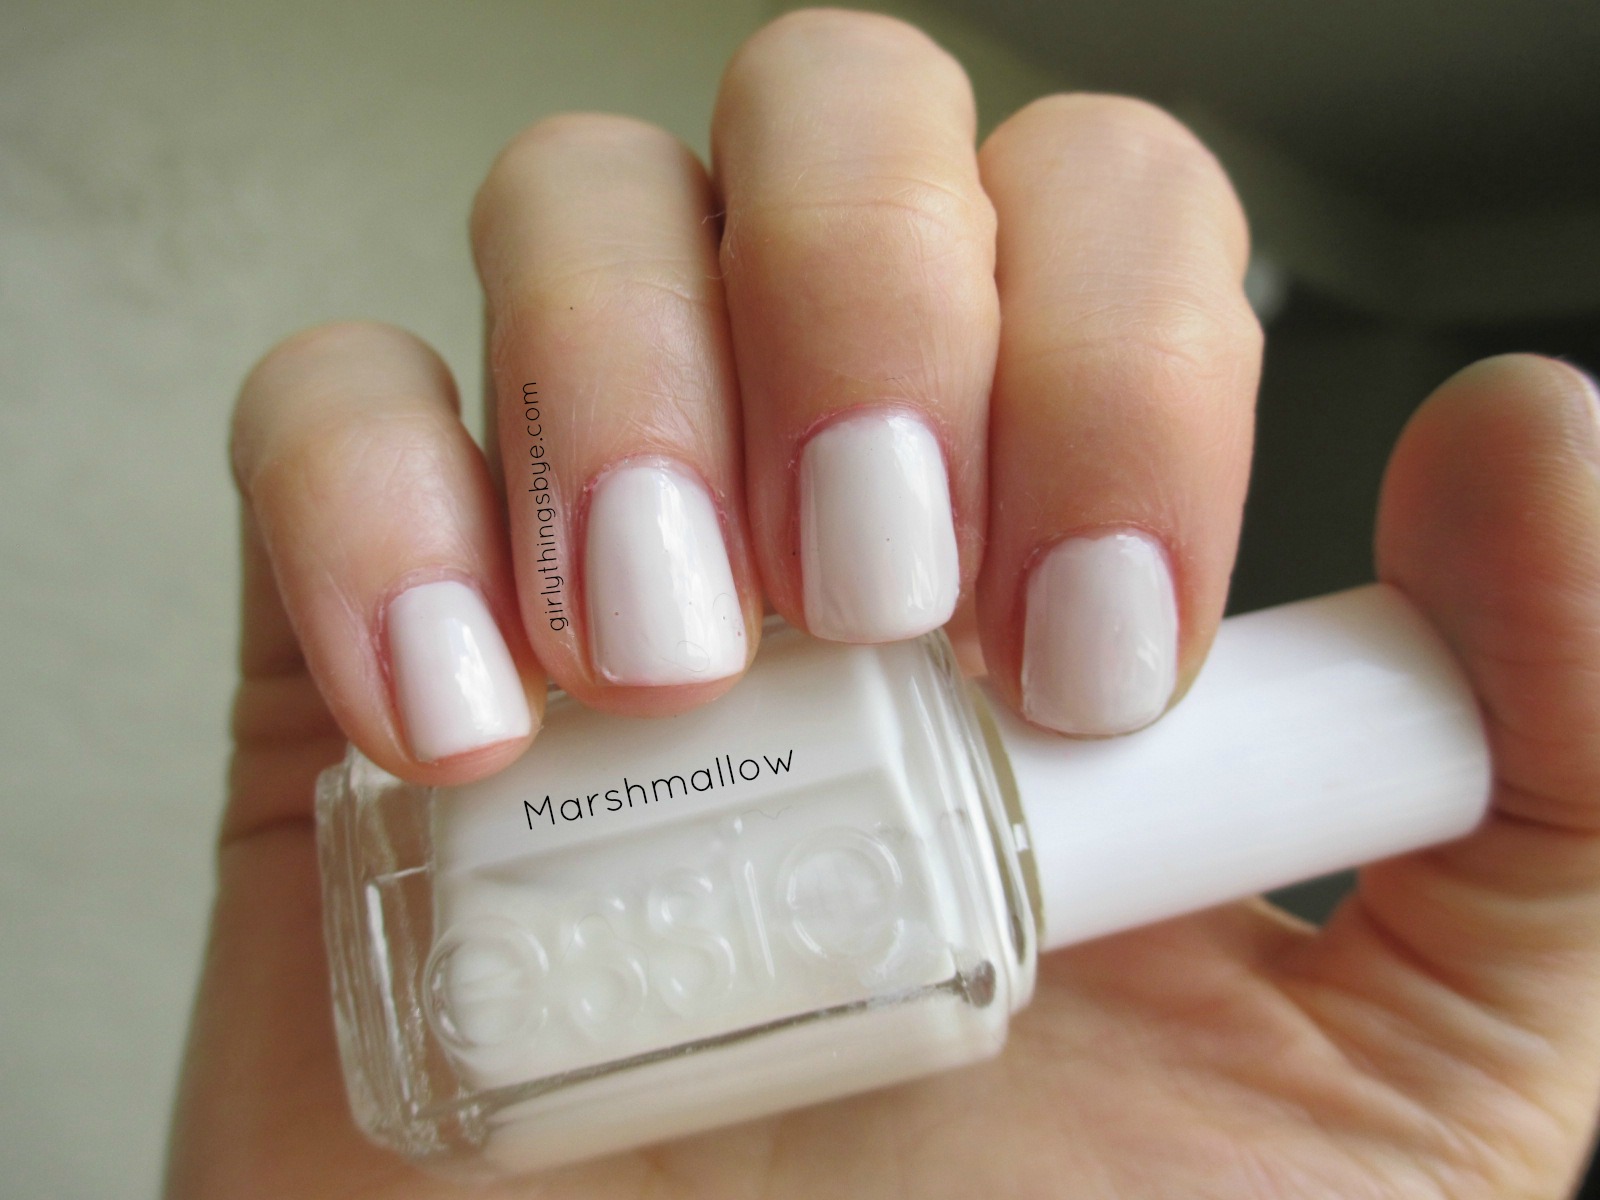 Marshmallow Nail Polish Color - wide 11